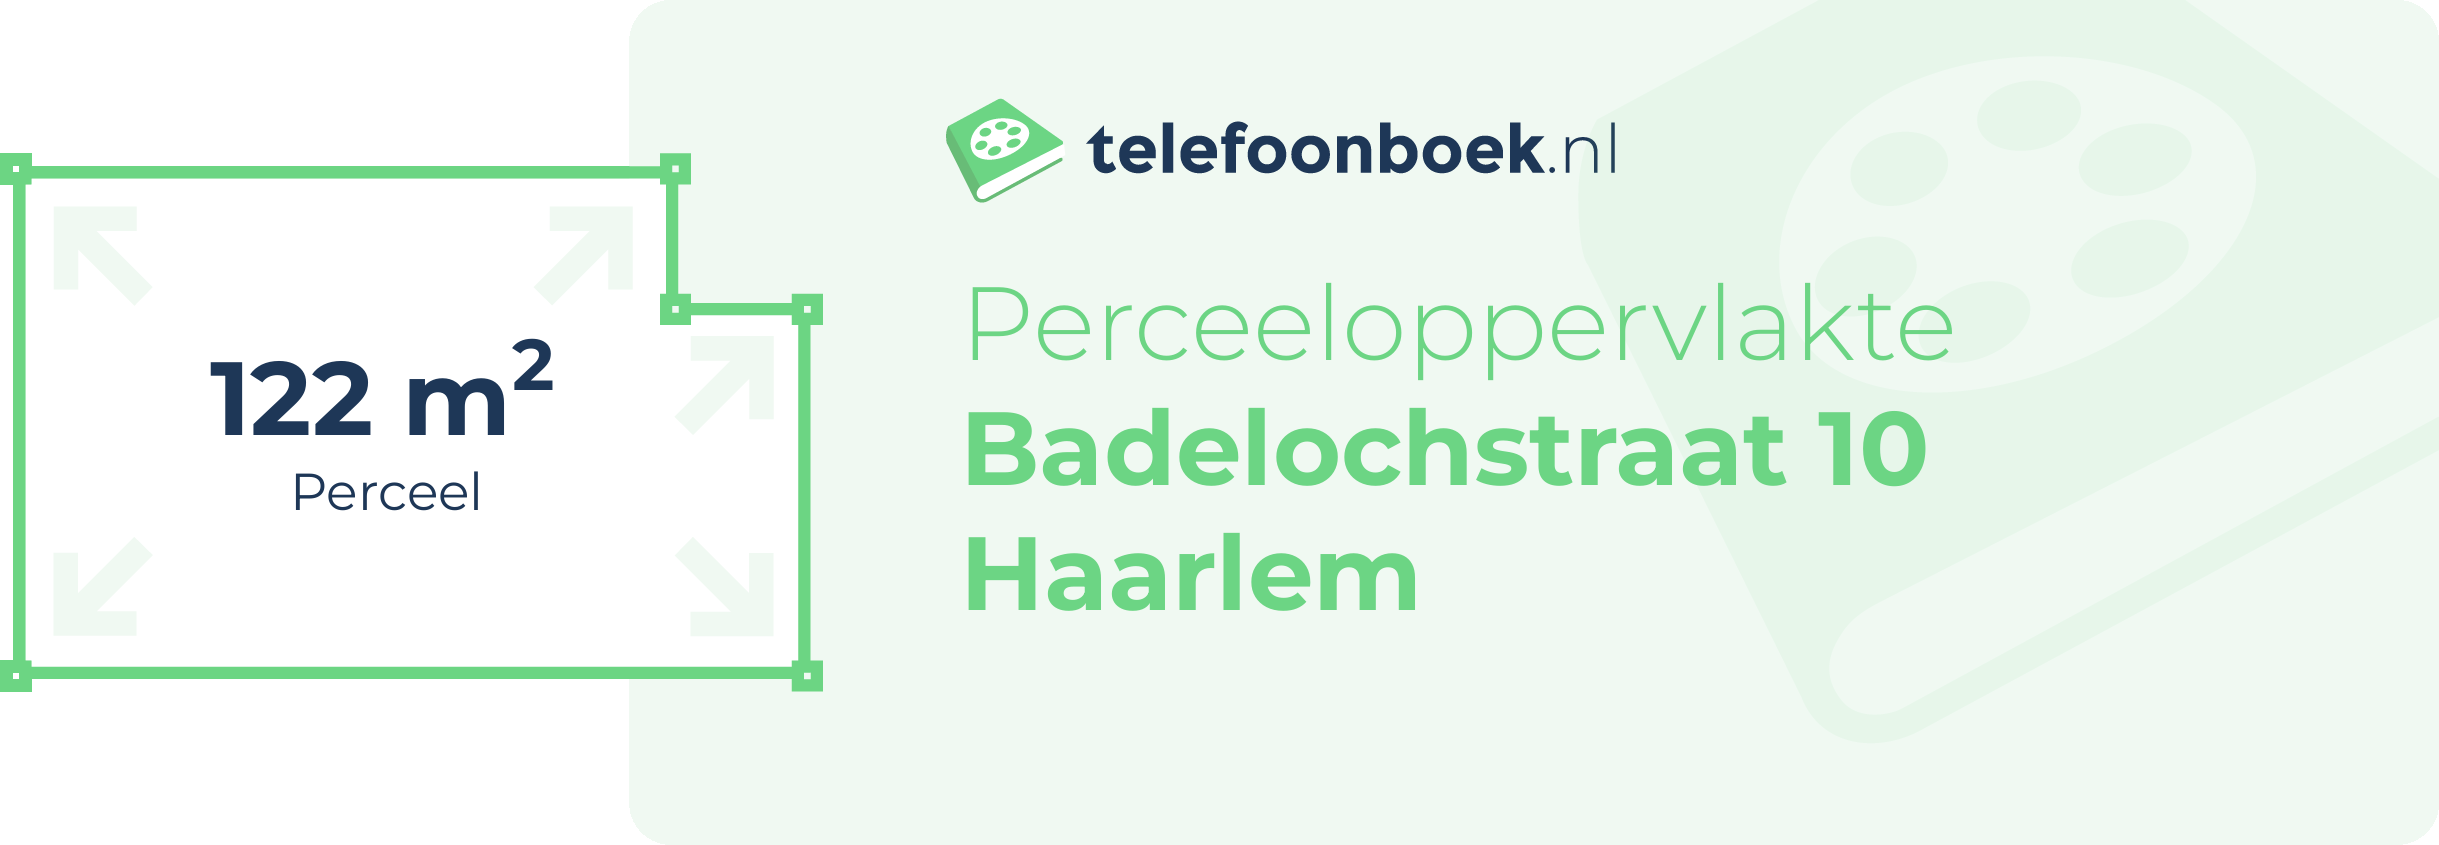 Perceeloppervlakte Badelochstraat 10 Haarlem